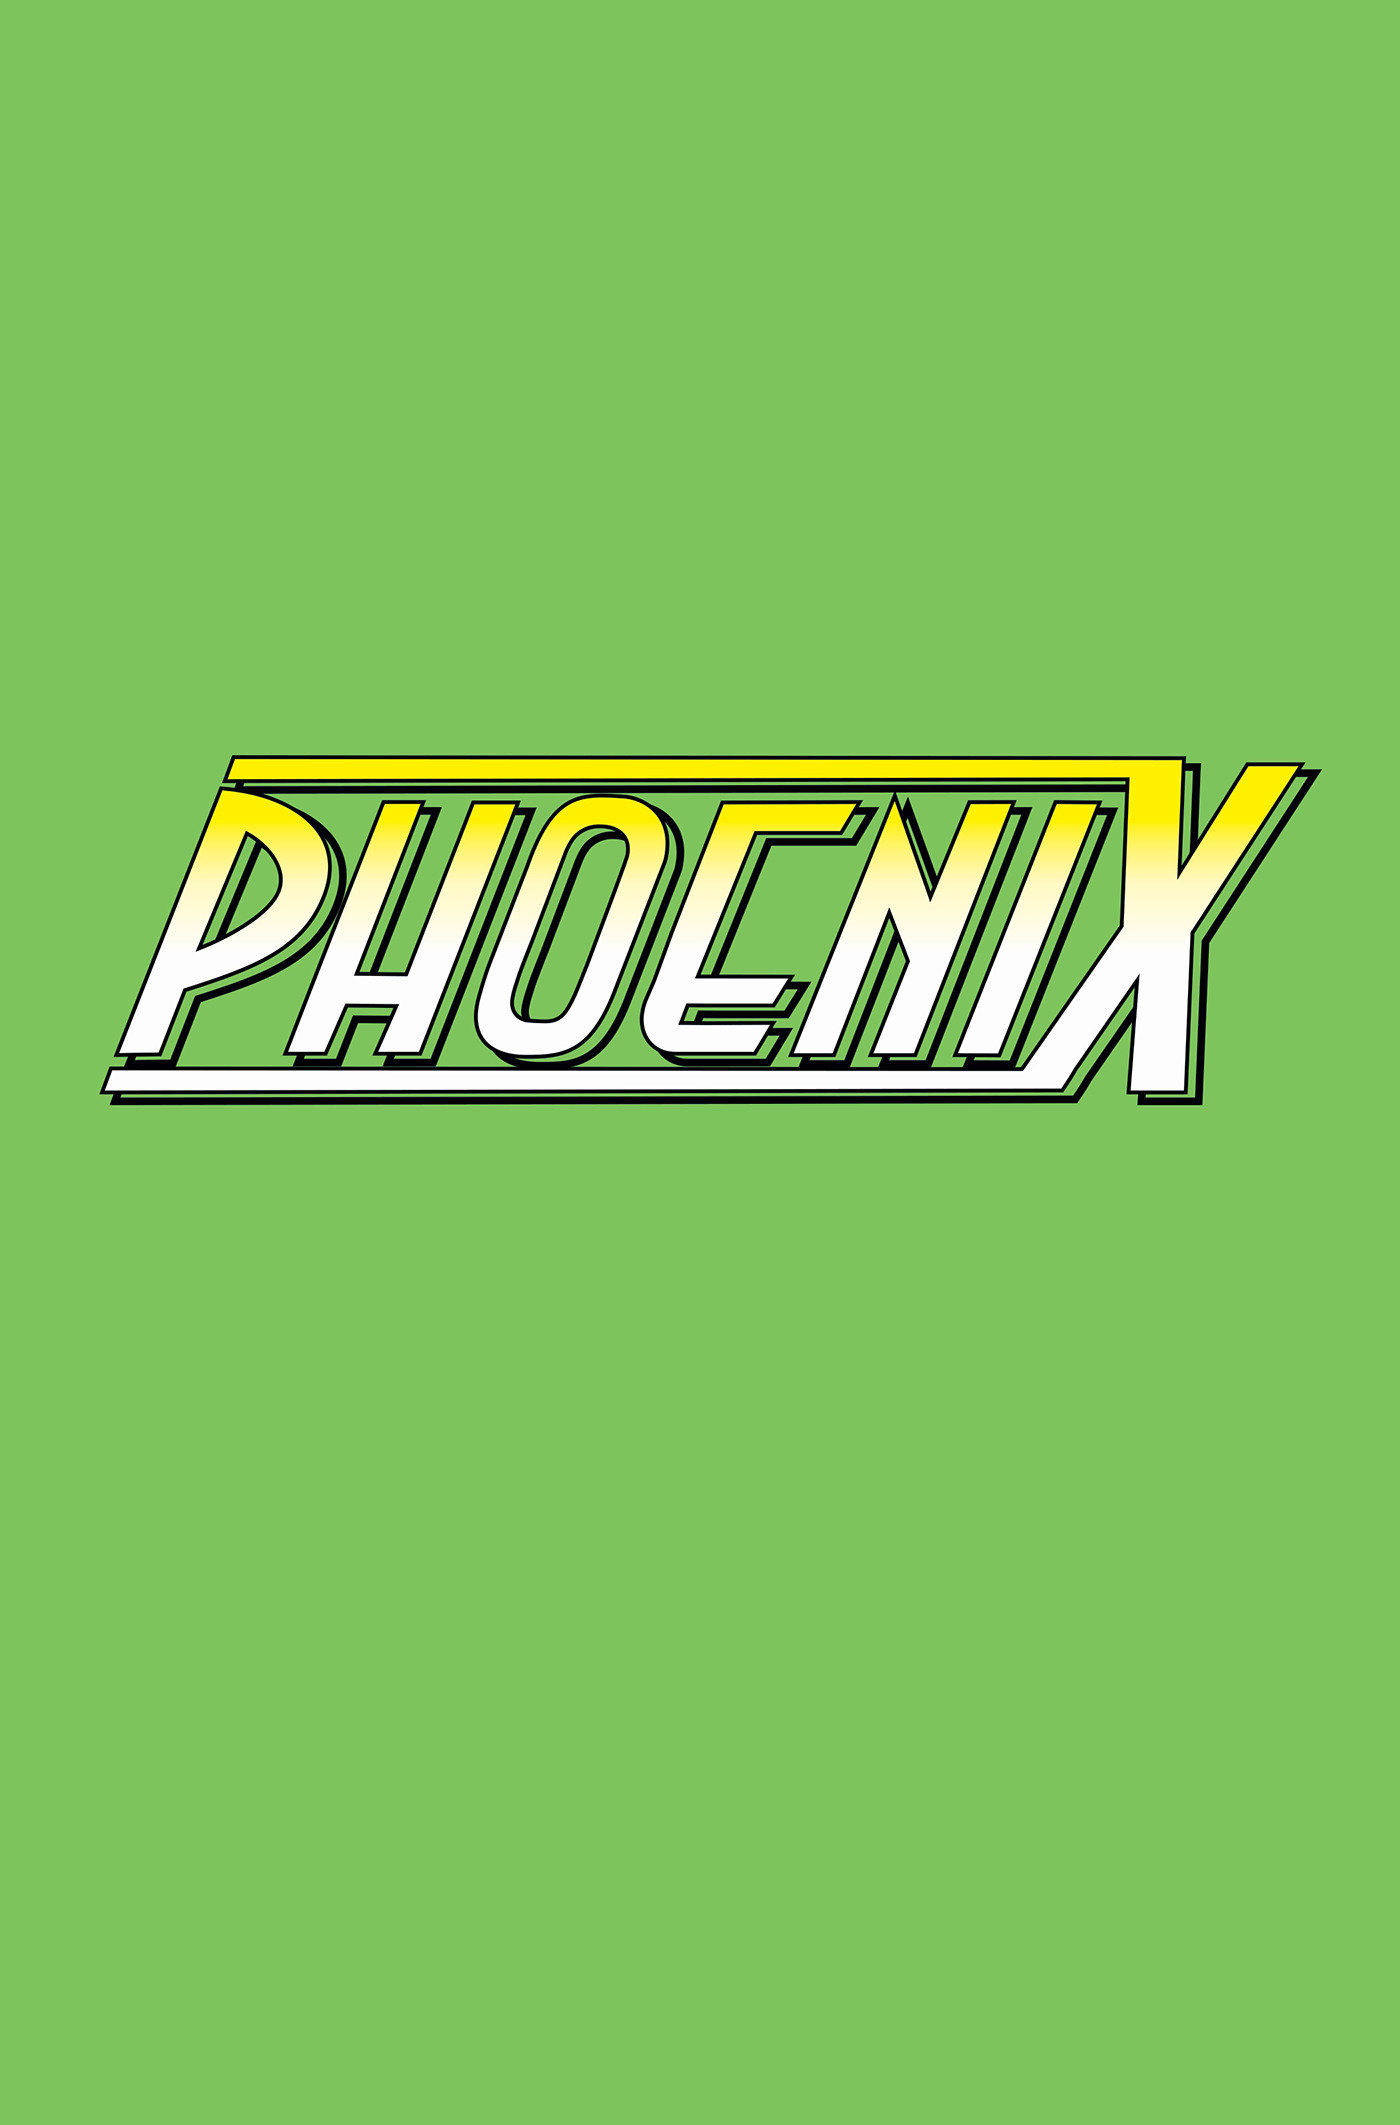 Phoenix #1 Logo Variant